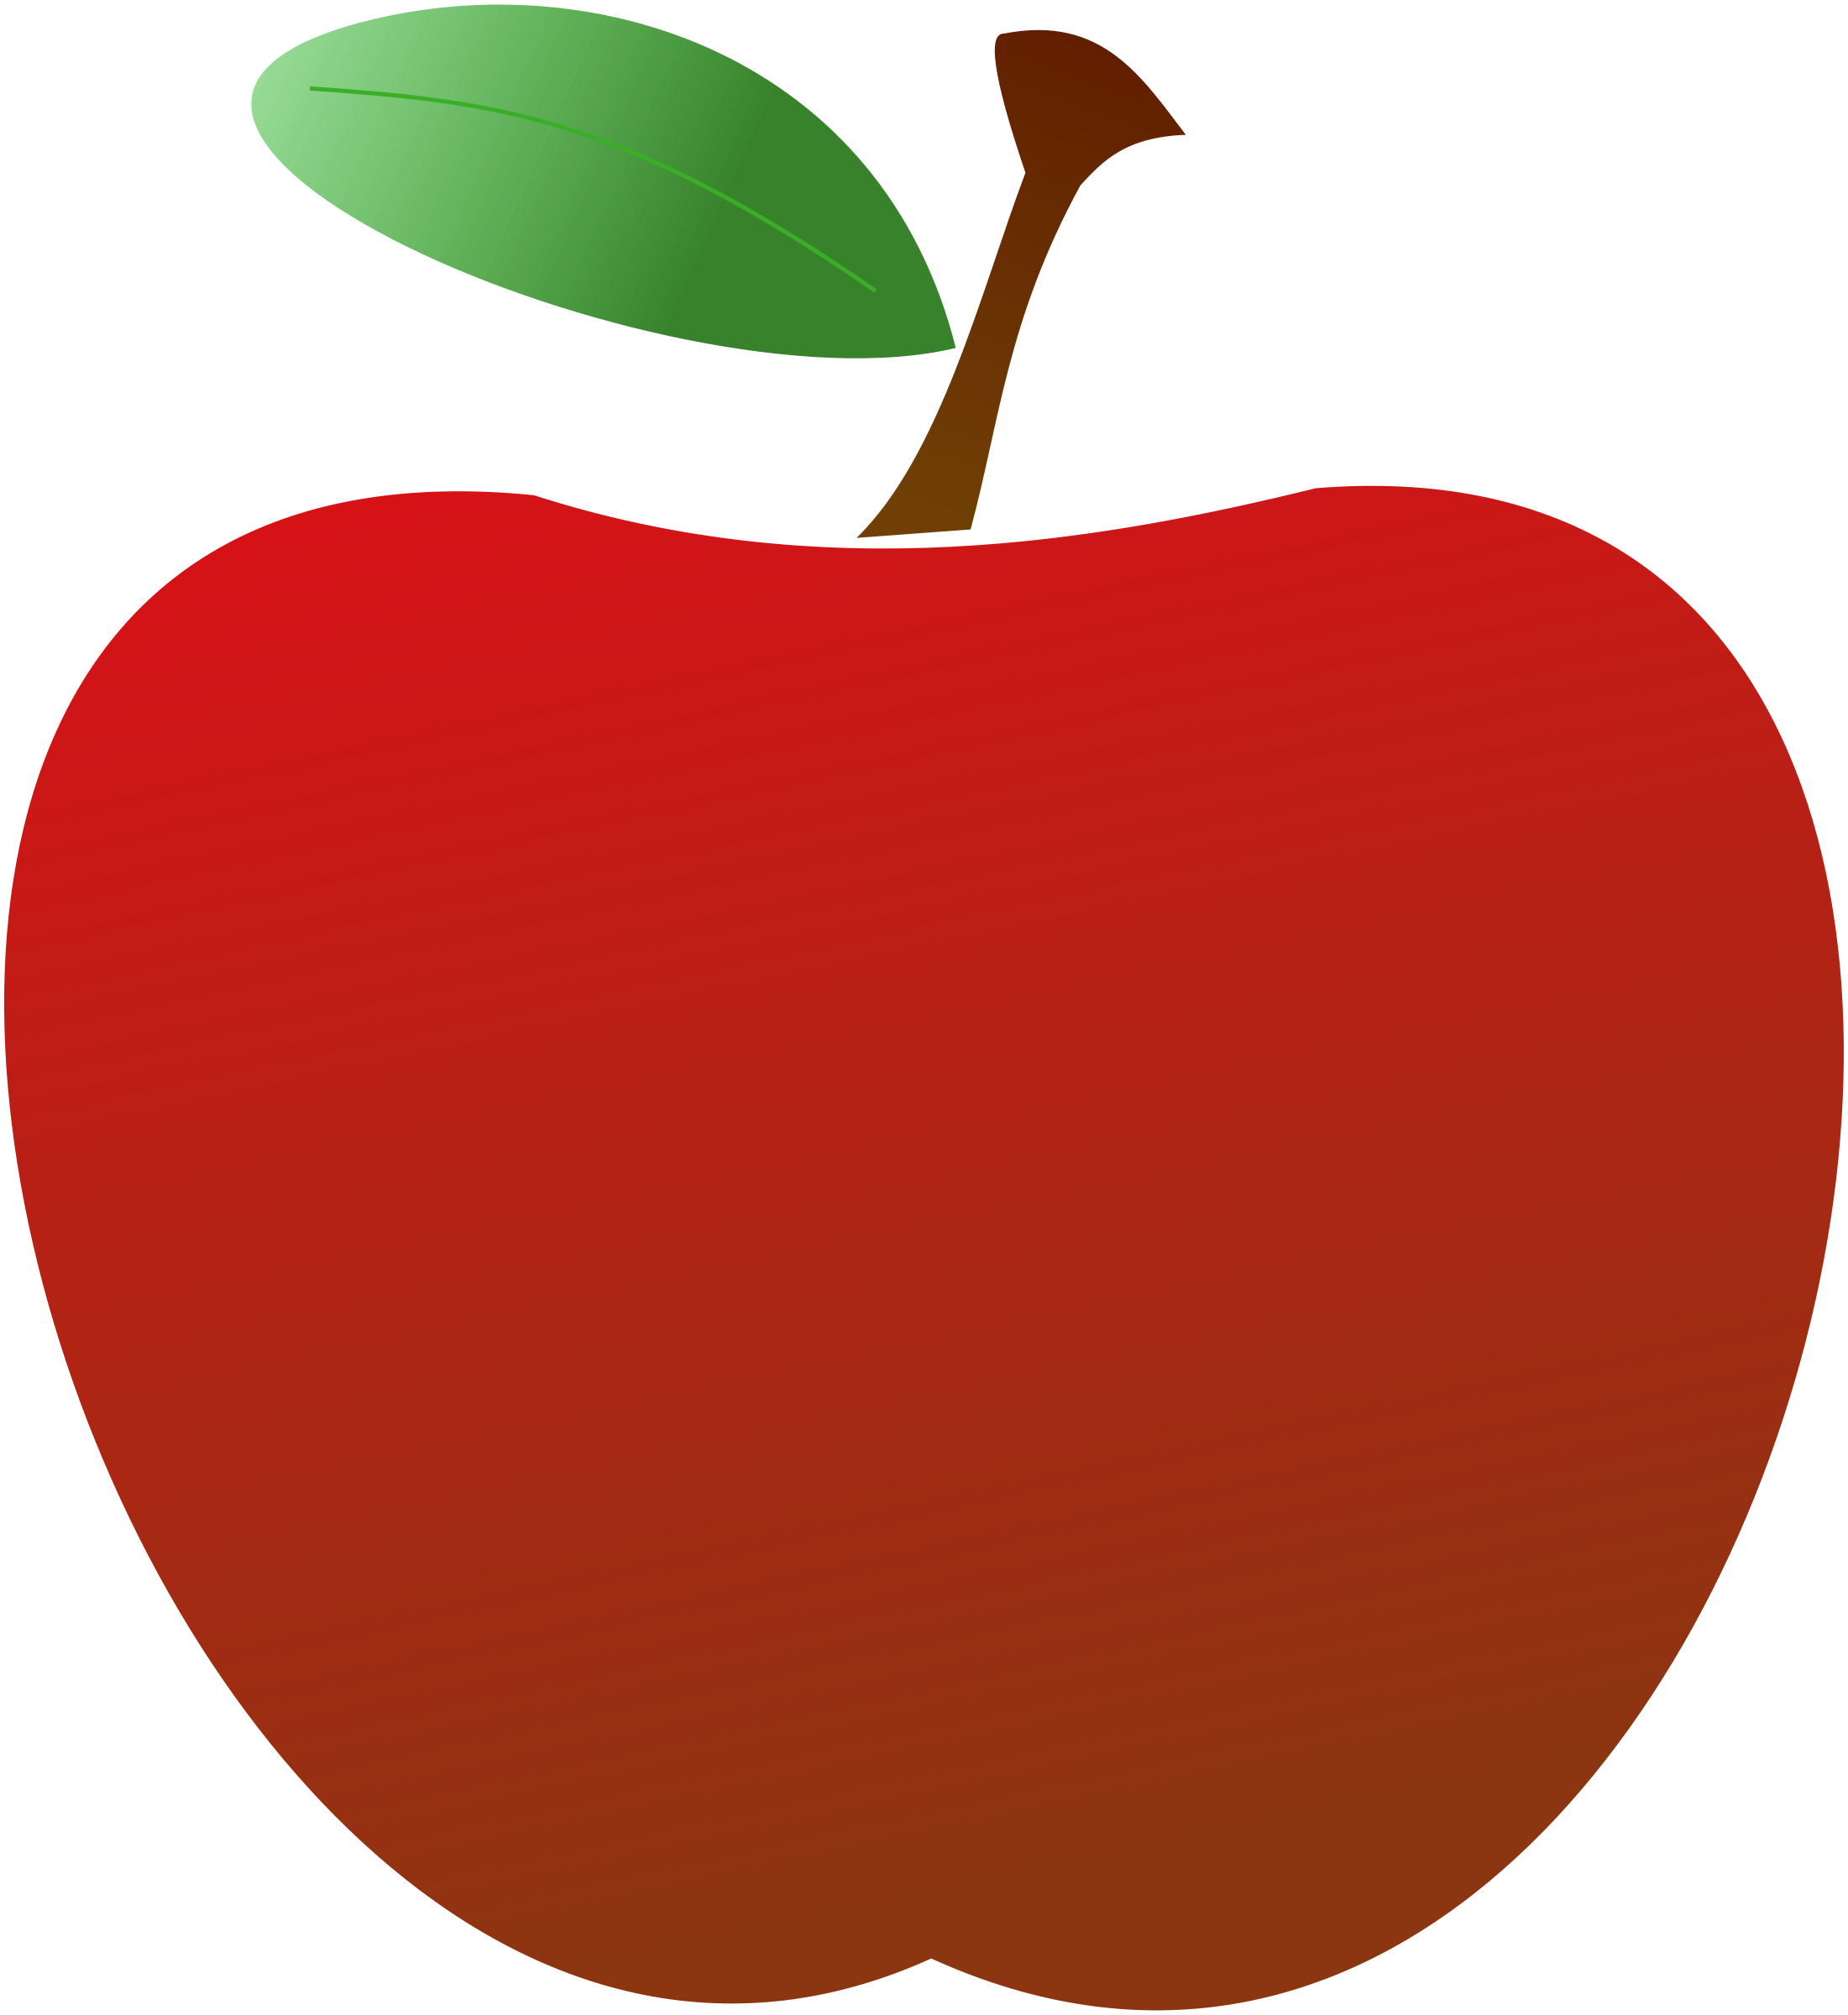 teacher apple clipart free images 4